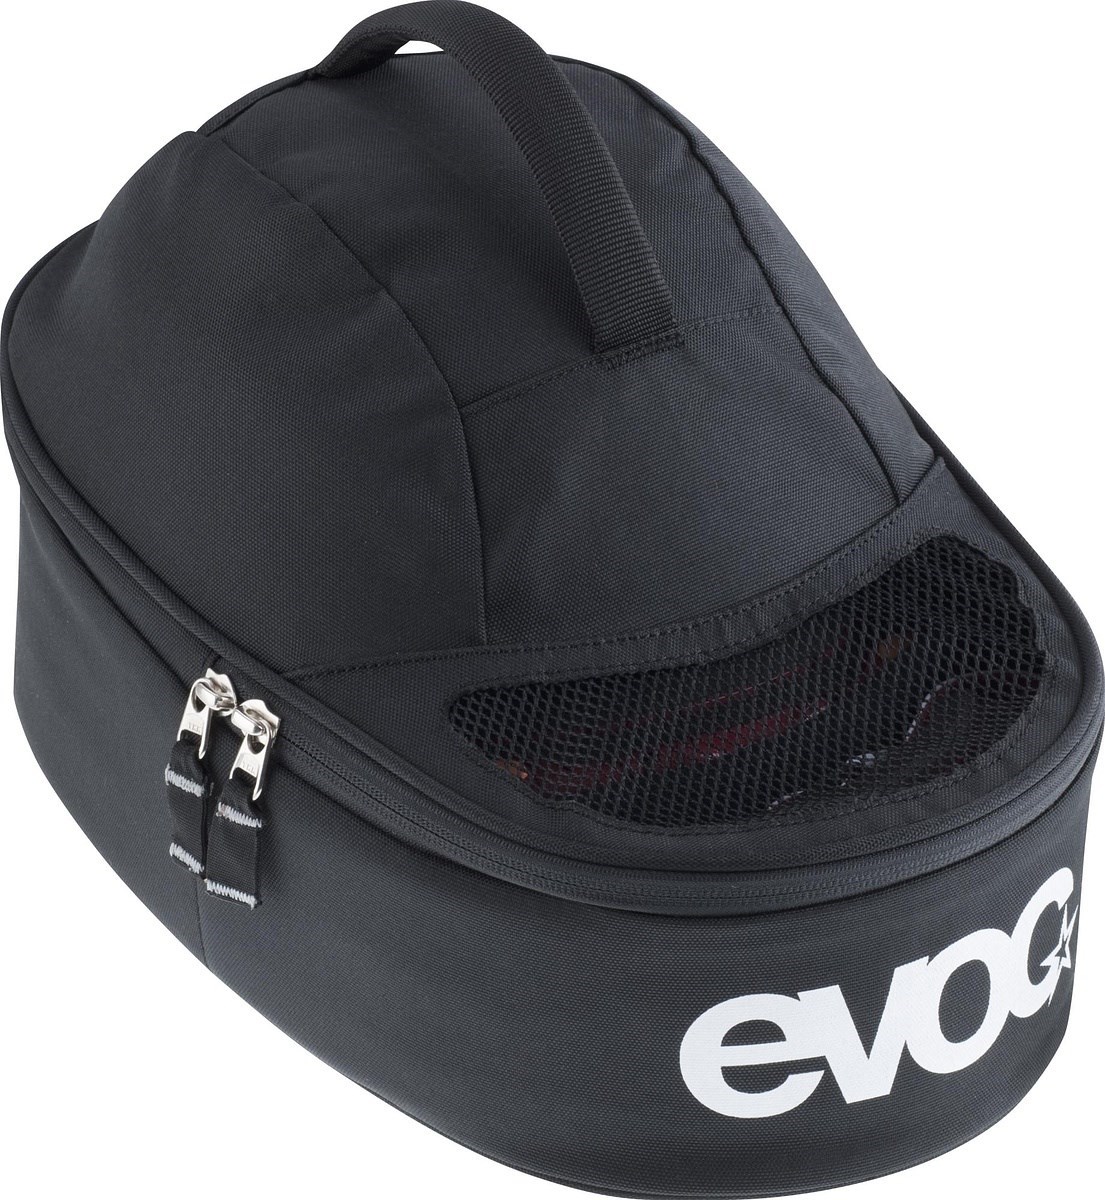 Evoc Ski / Snowboard Helmet Bag - 12 Litres product image